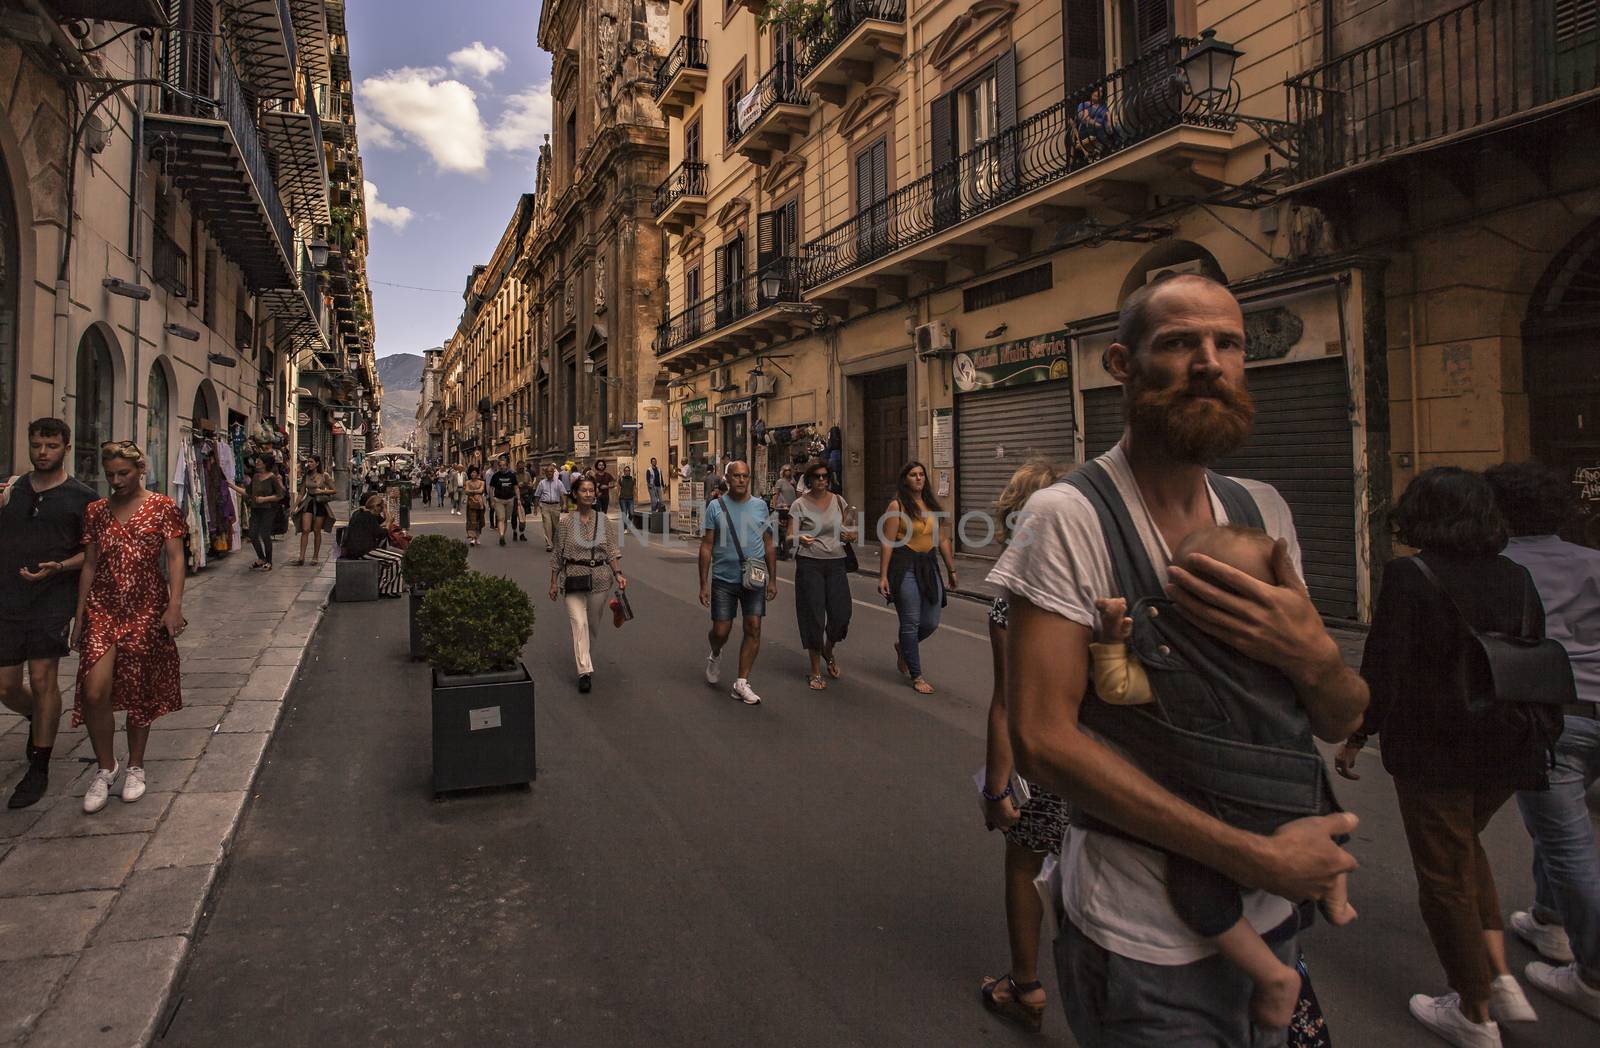 Street life in Via Maqueda in Palermo full of people walking around